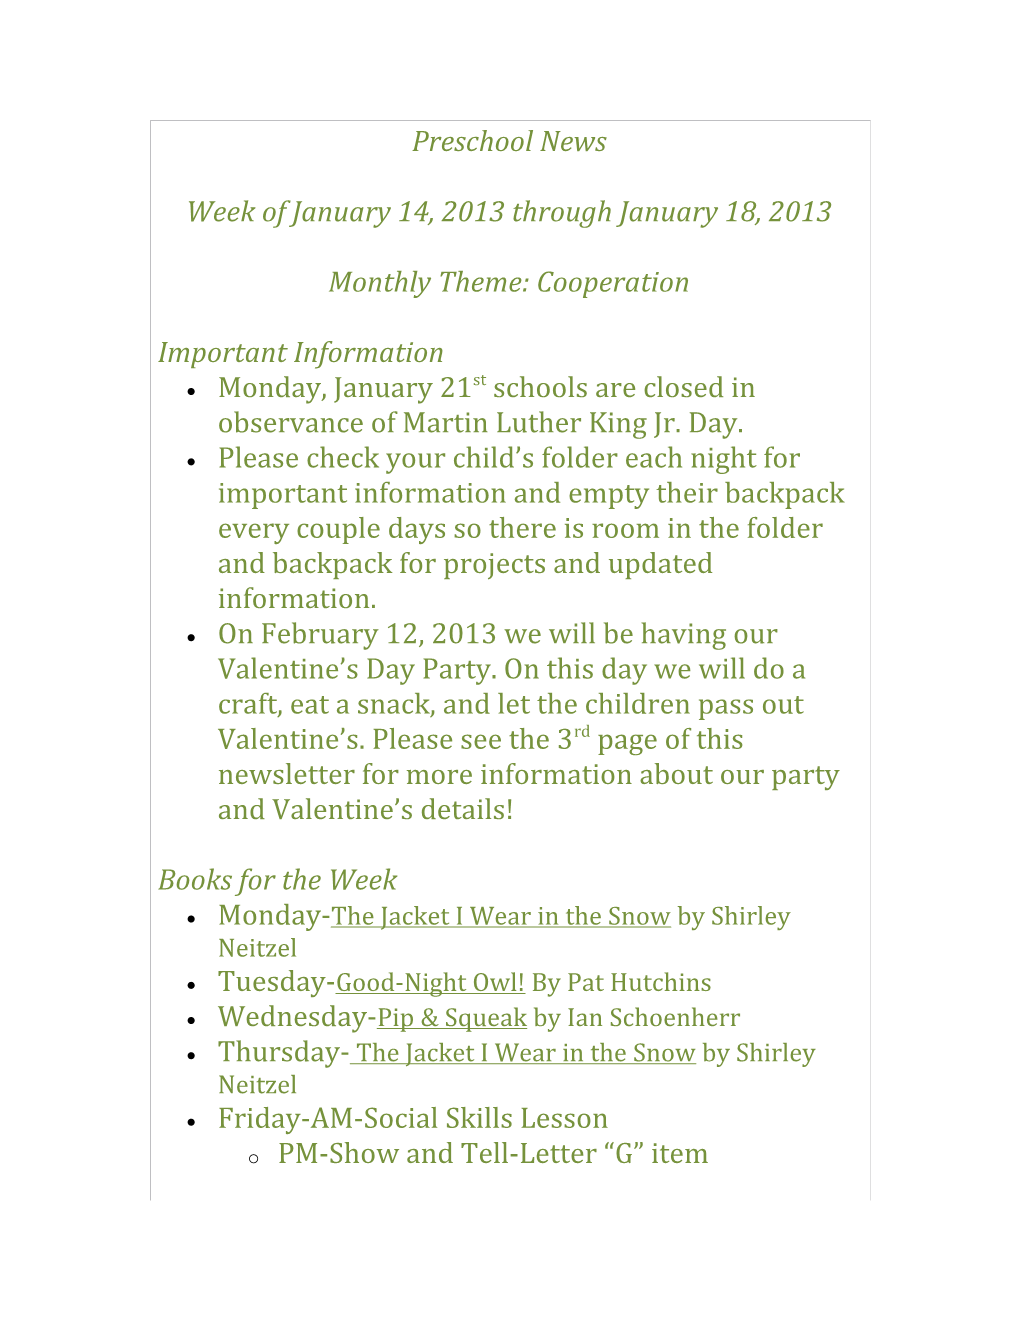 Week of January 14, 2013 Through January 18, 2013